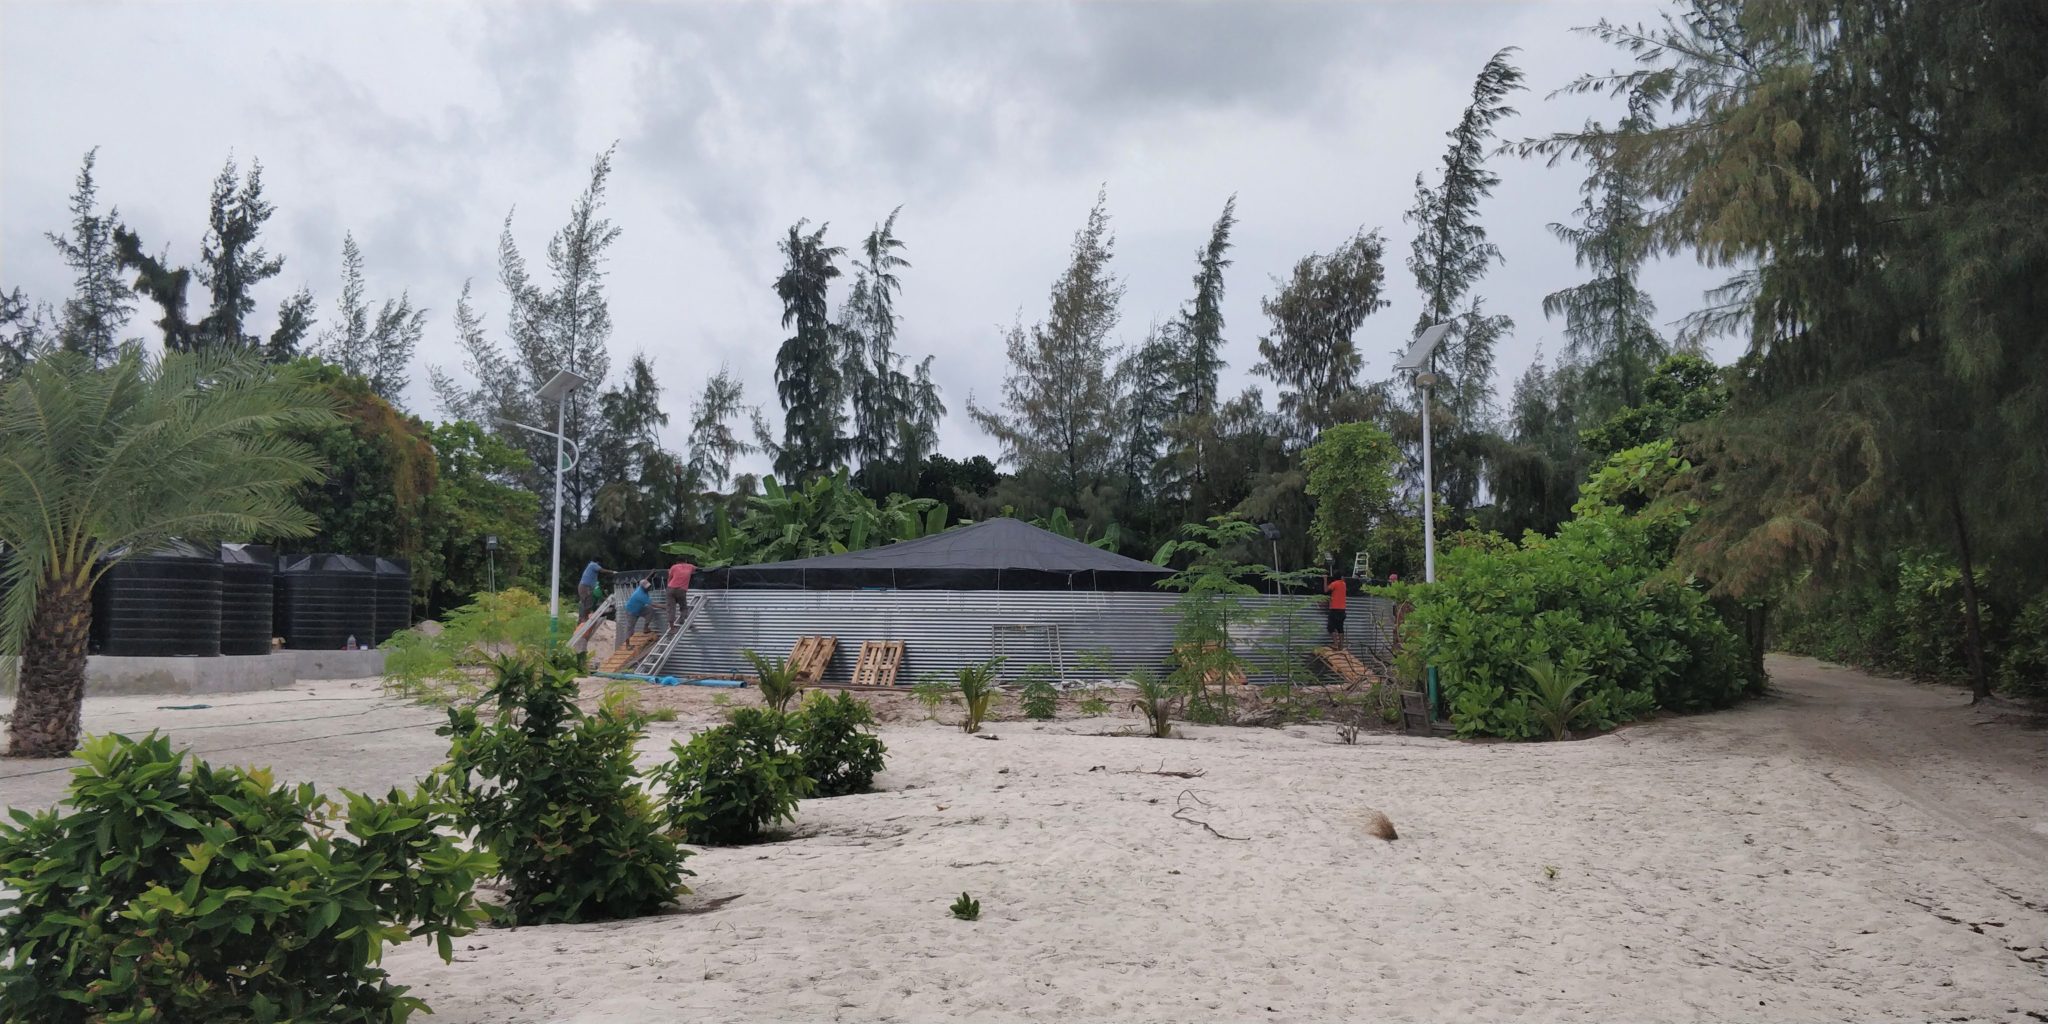 Water storage for a melon nursery, Maldives